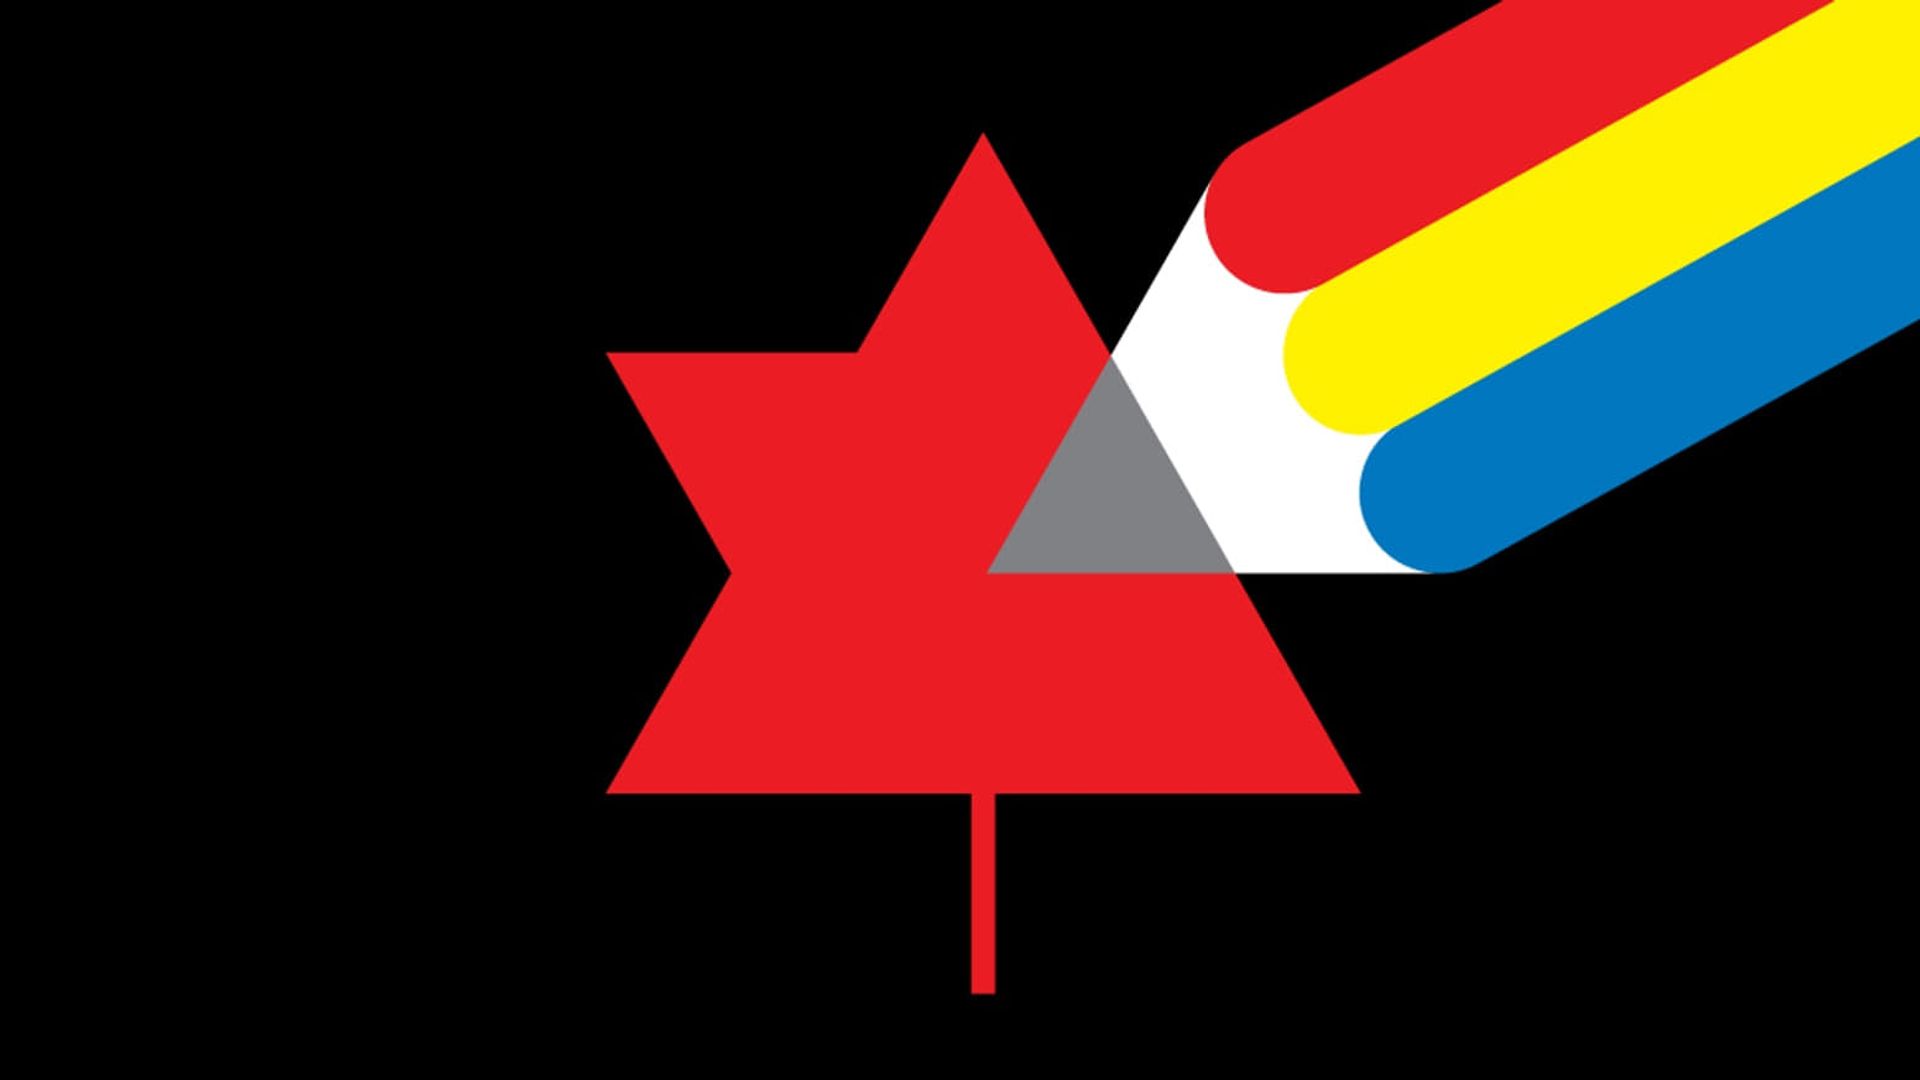 Design Canada background